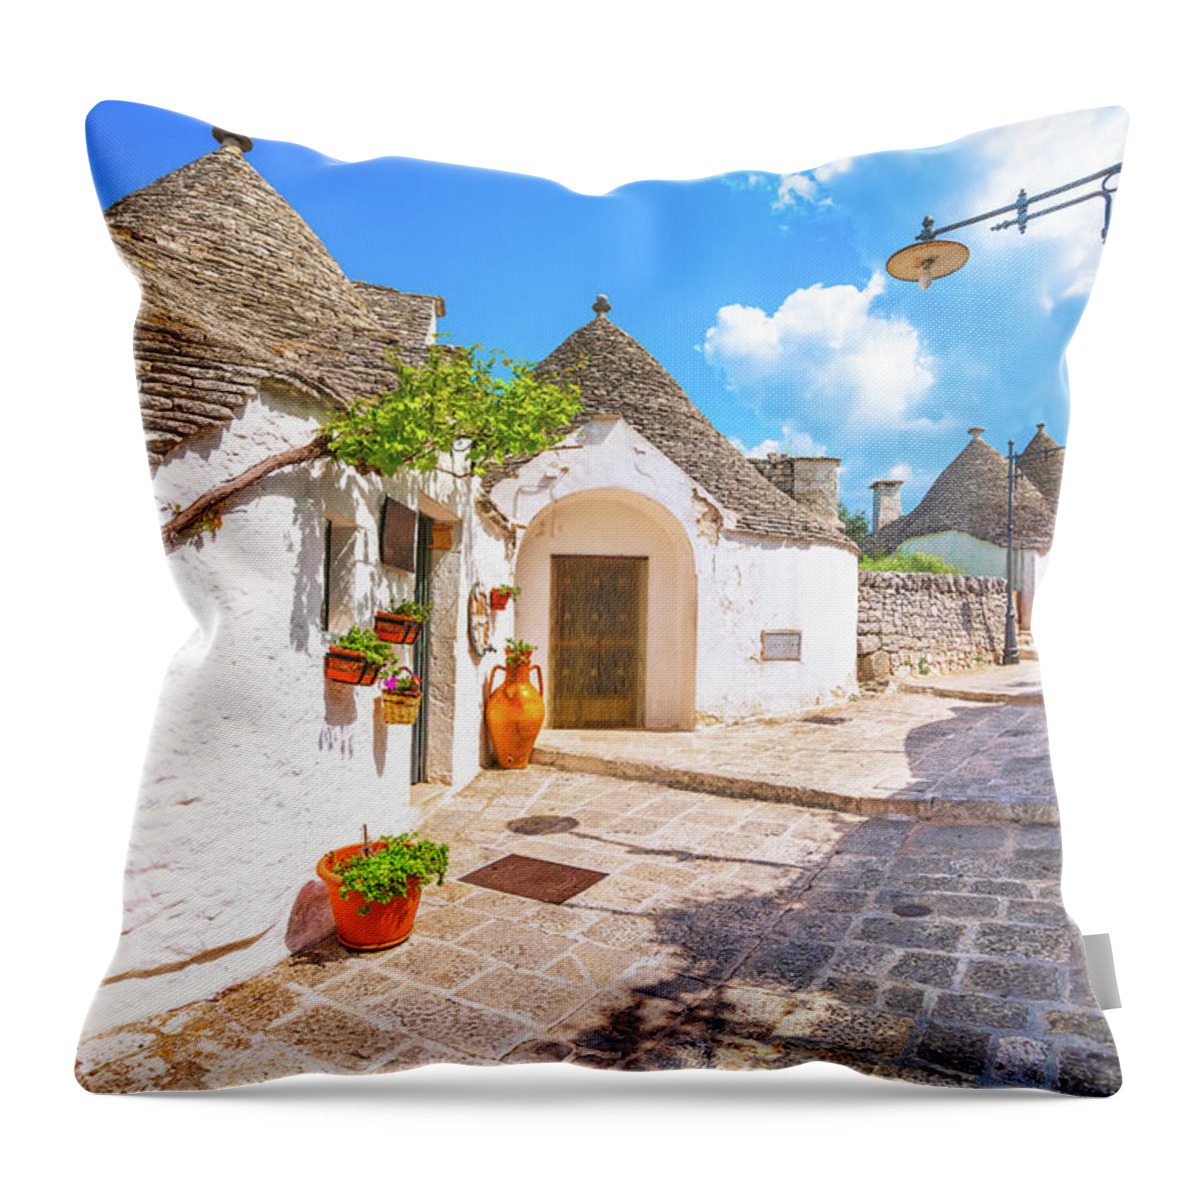 Trulli Throw Pillow featuring the photograph Alberobello Street, Trulli and Grapevine by Stefano Orazzini